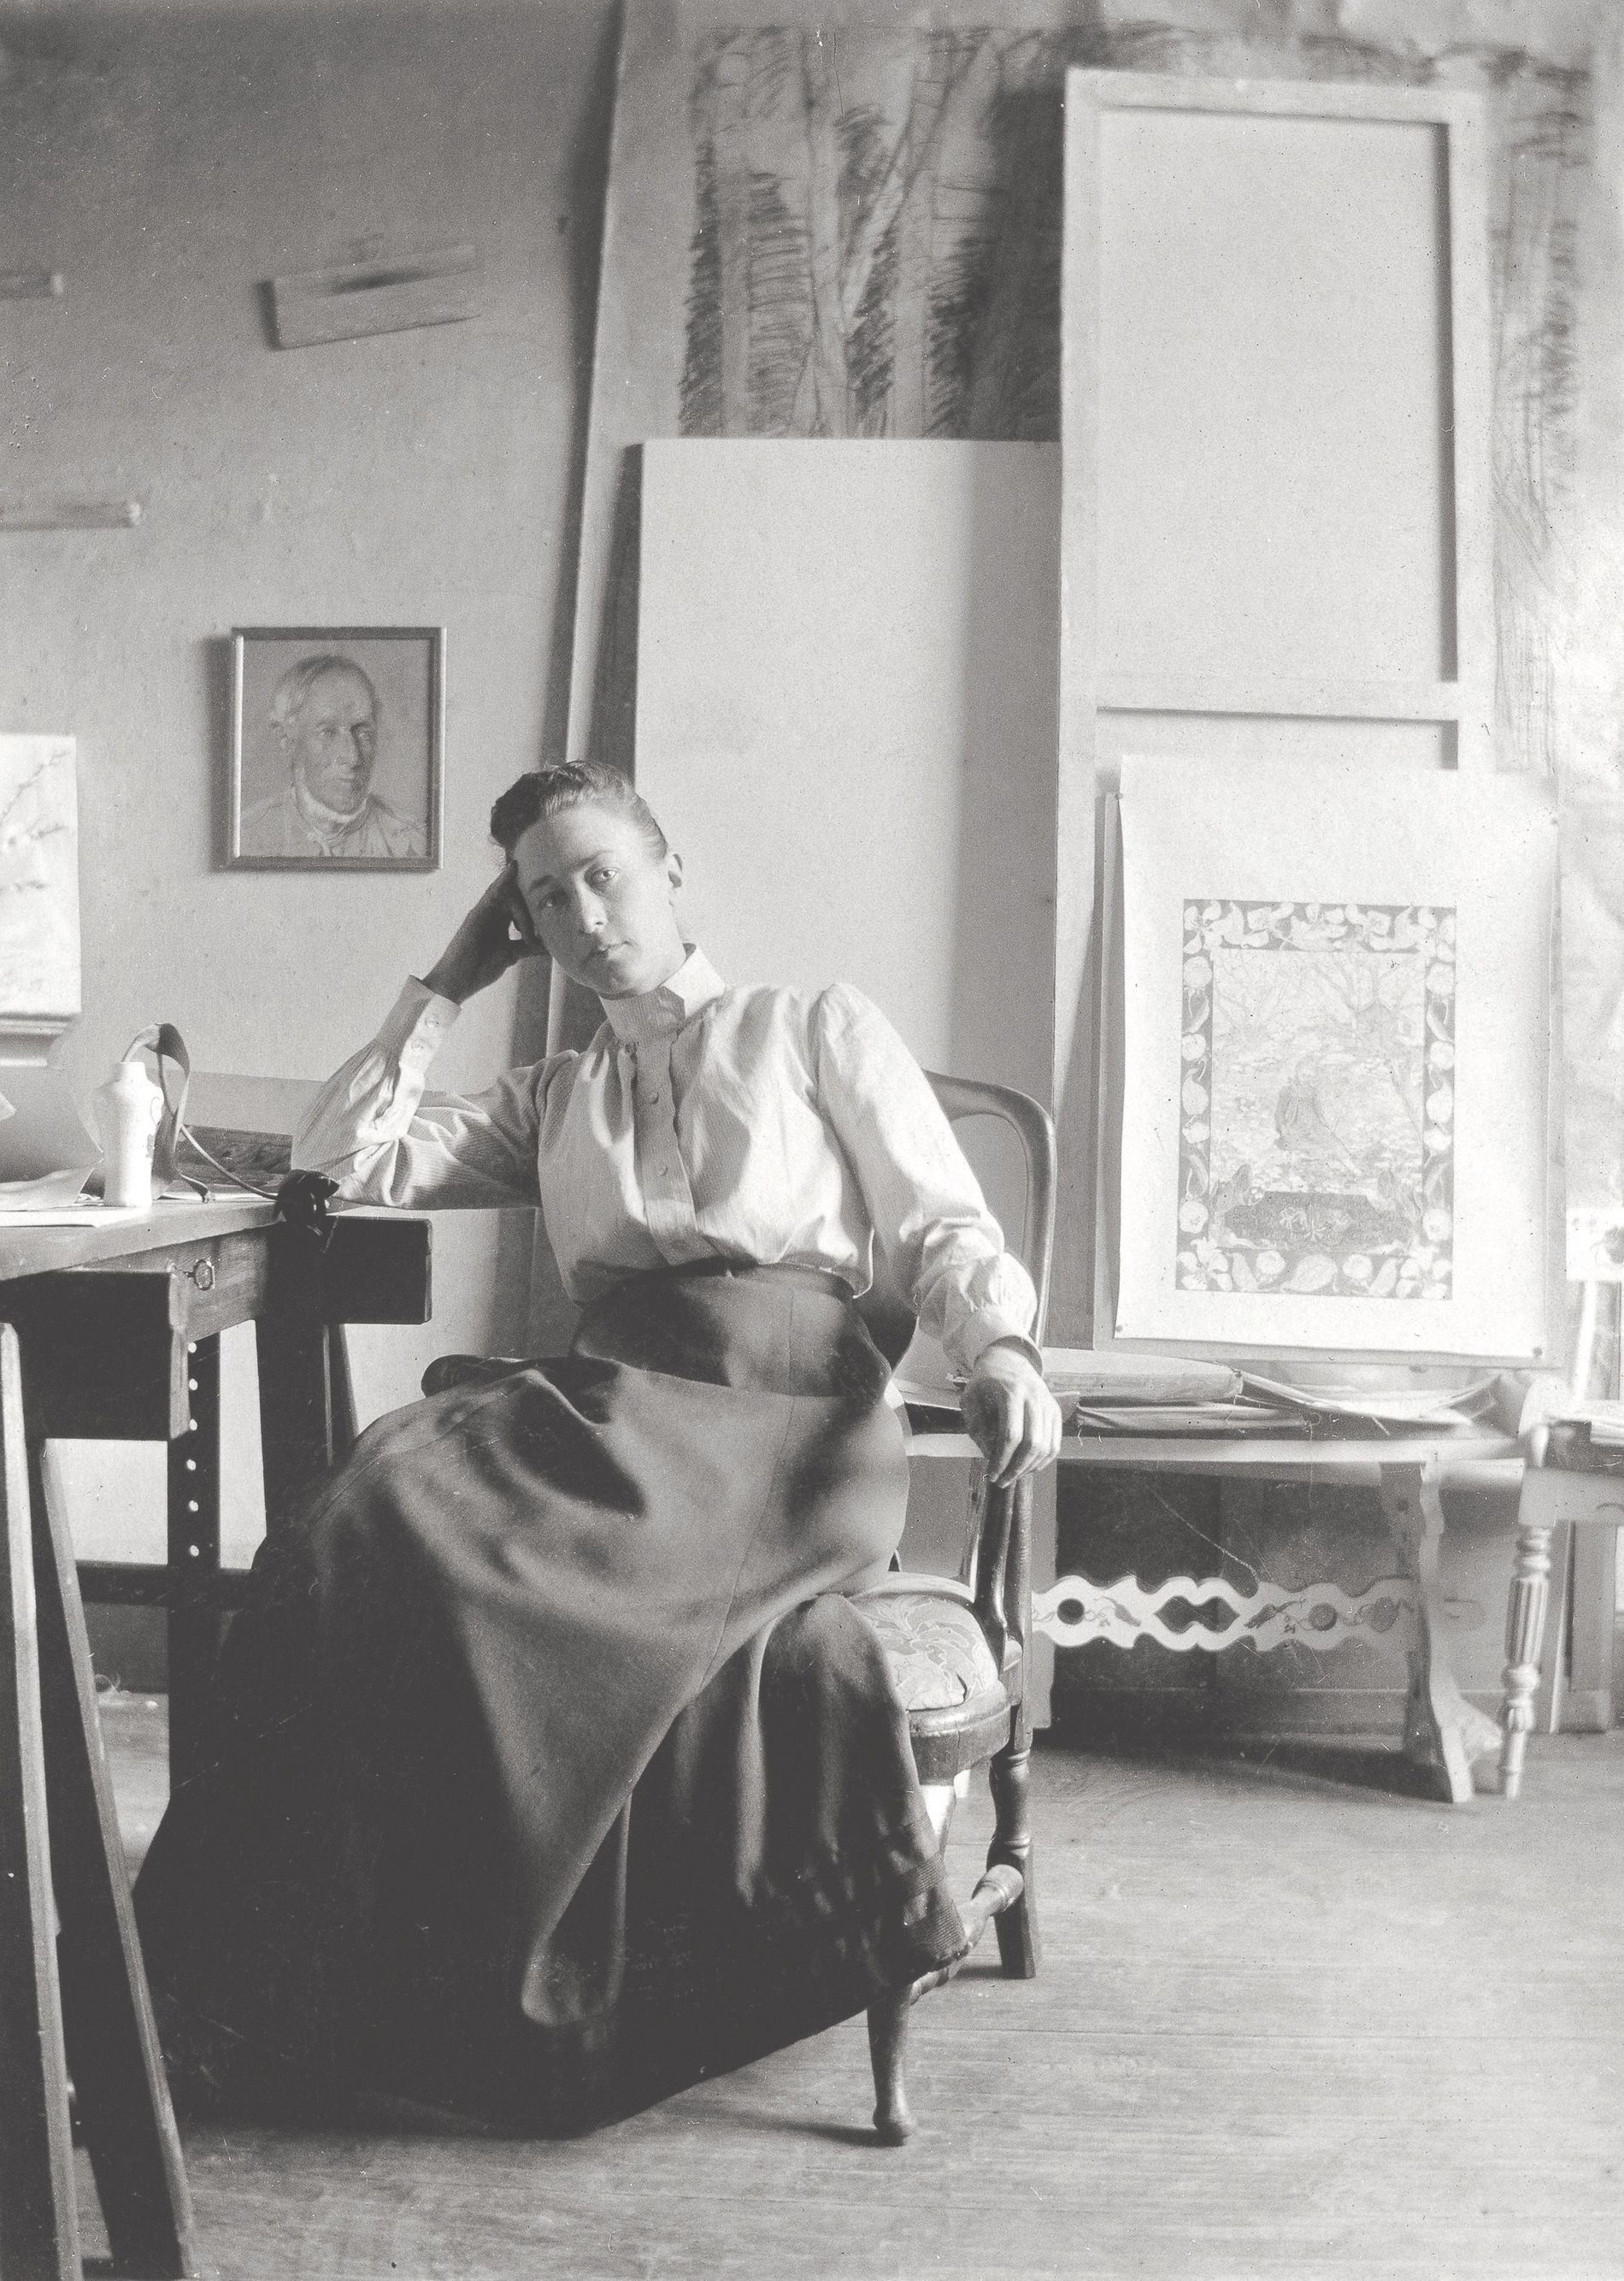  Hilma af Klint in her studio on Hamngatan 5, 1895